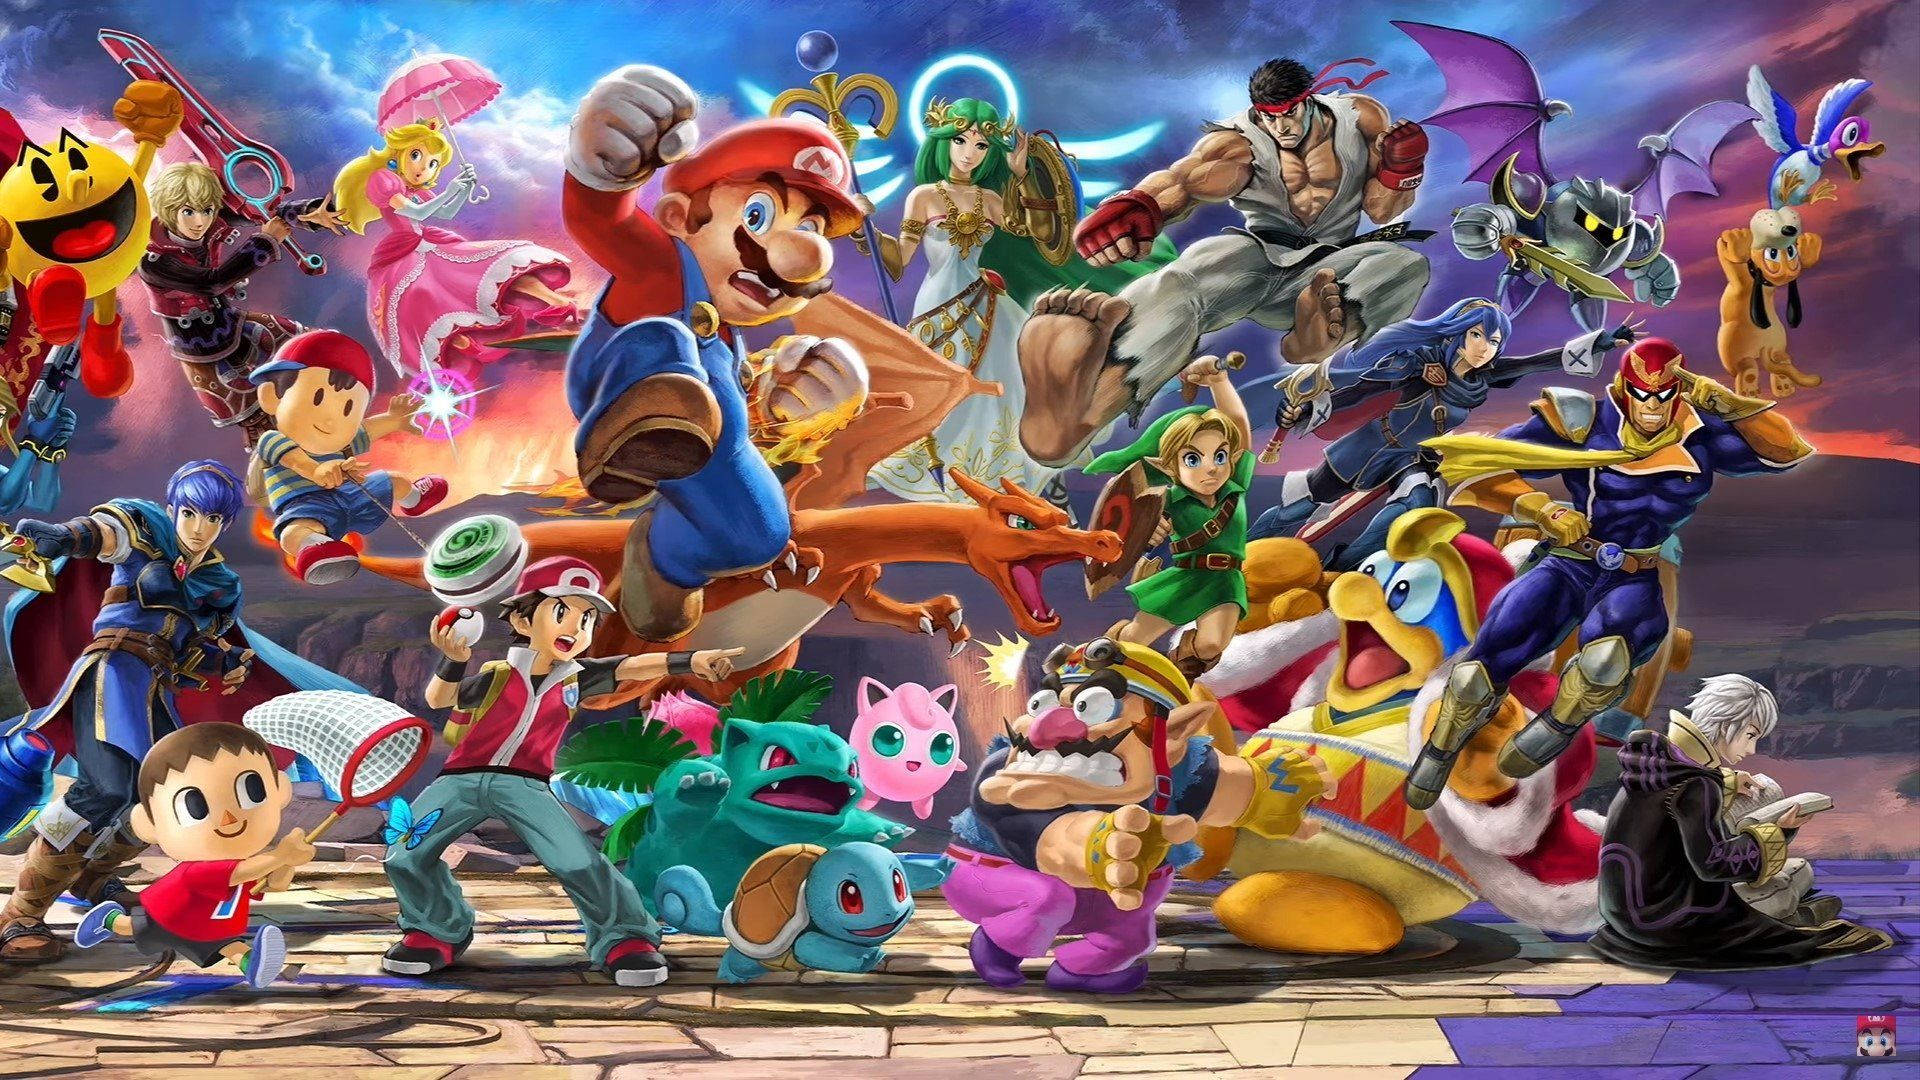 Players enjoy intense matchups in Super Smash Bros Ultimate Wallpaper